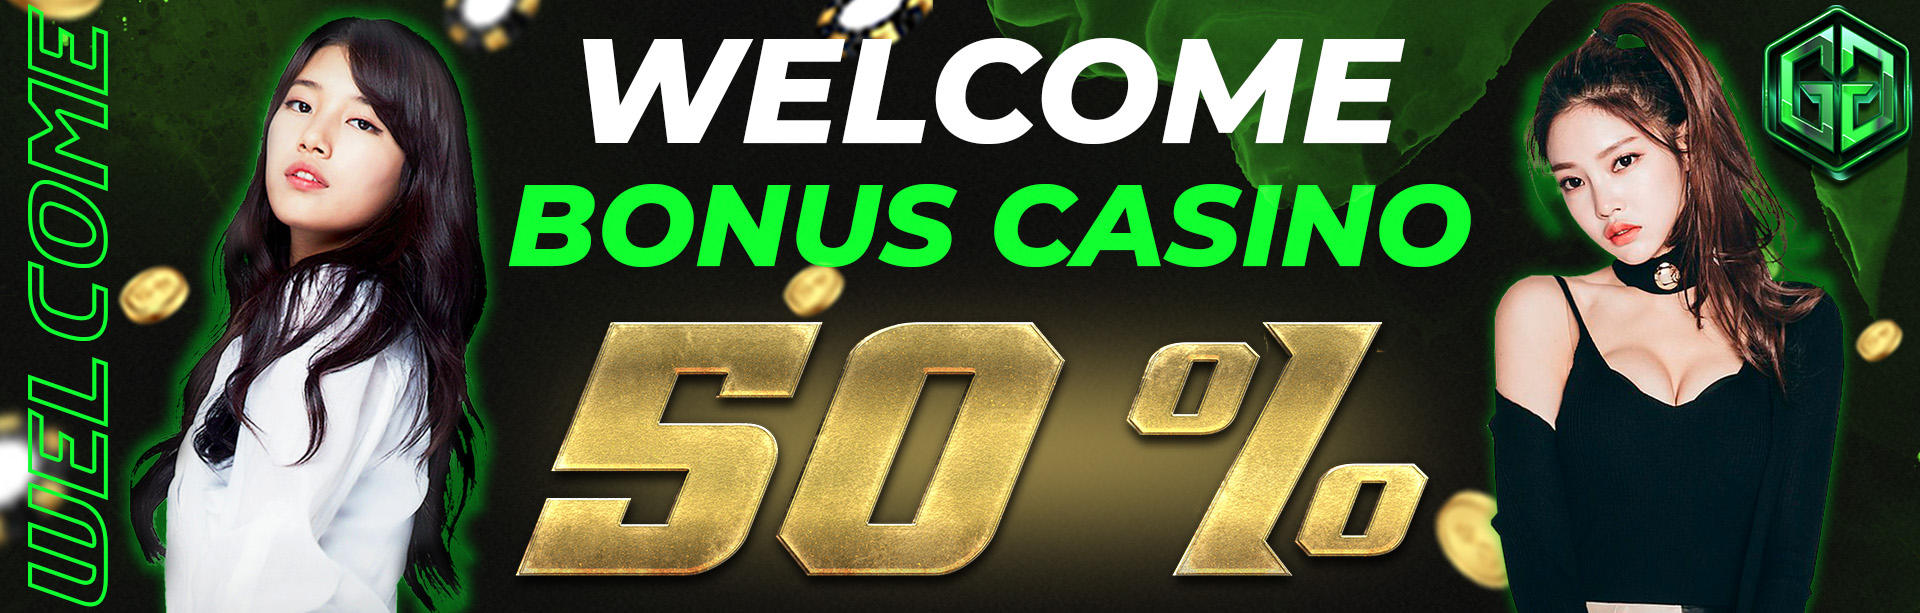 Welcome Bonus Casino 50%